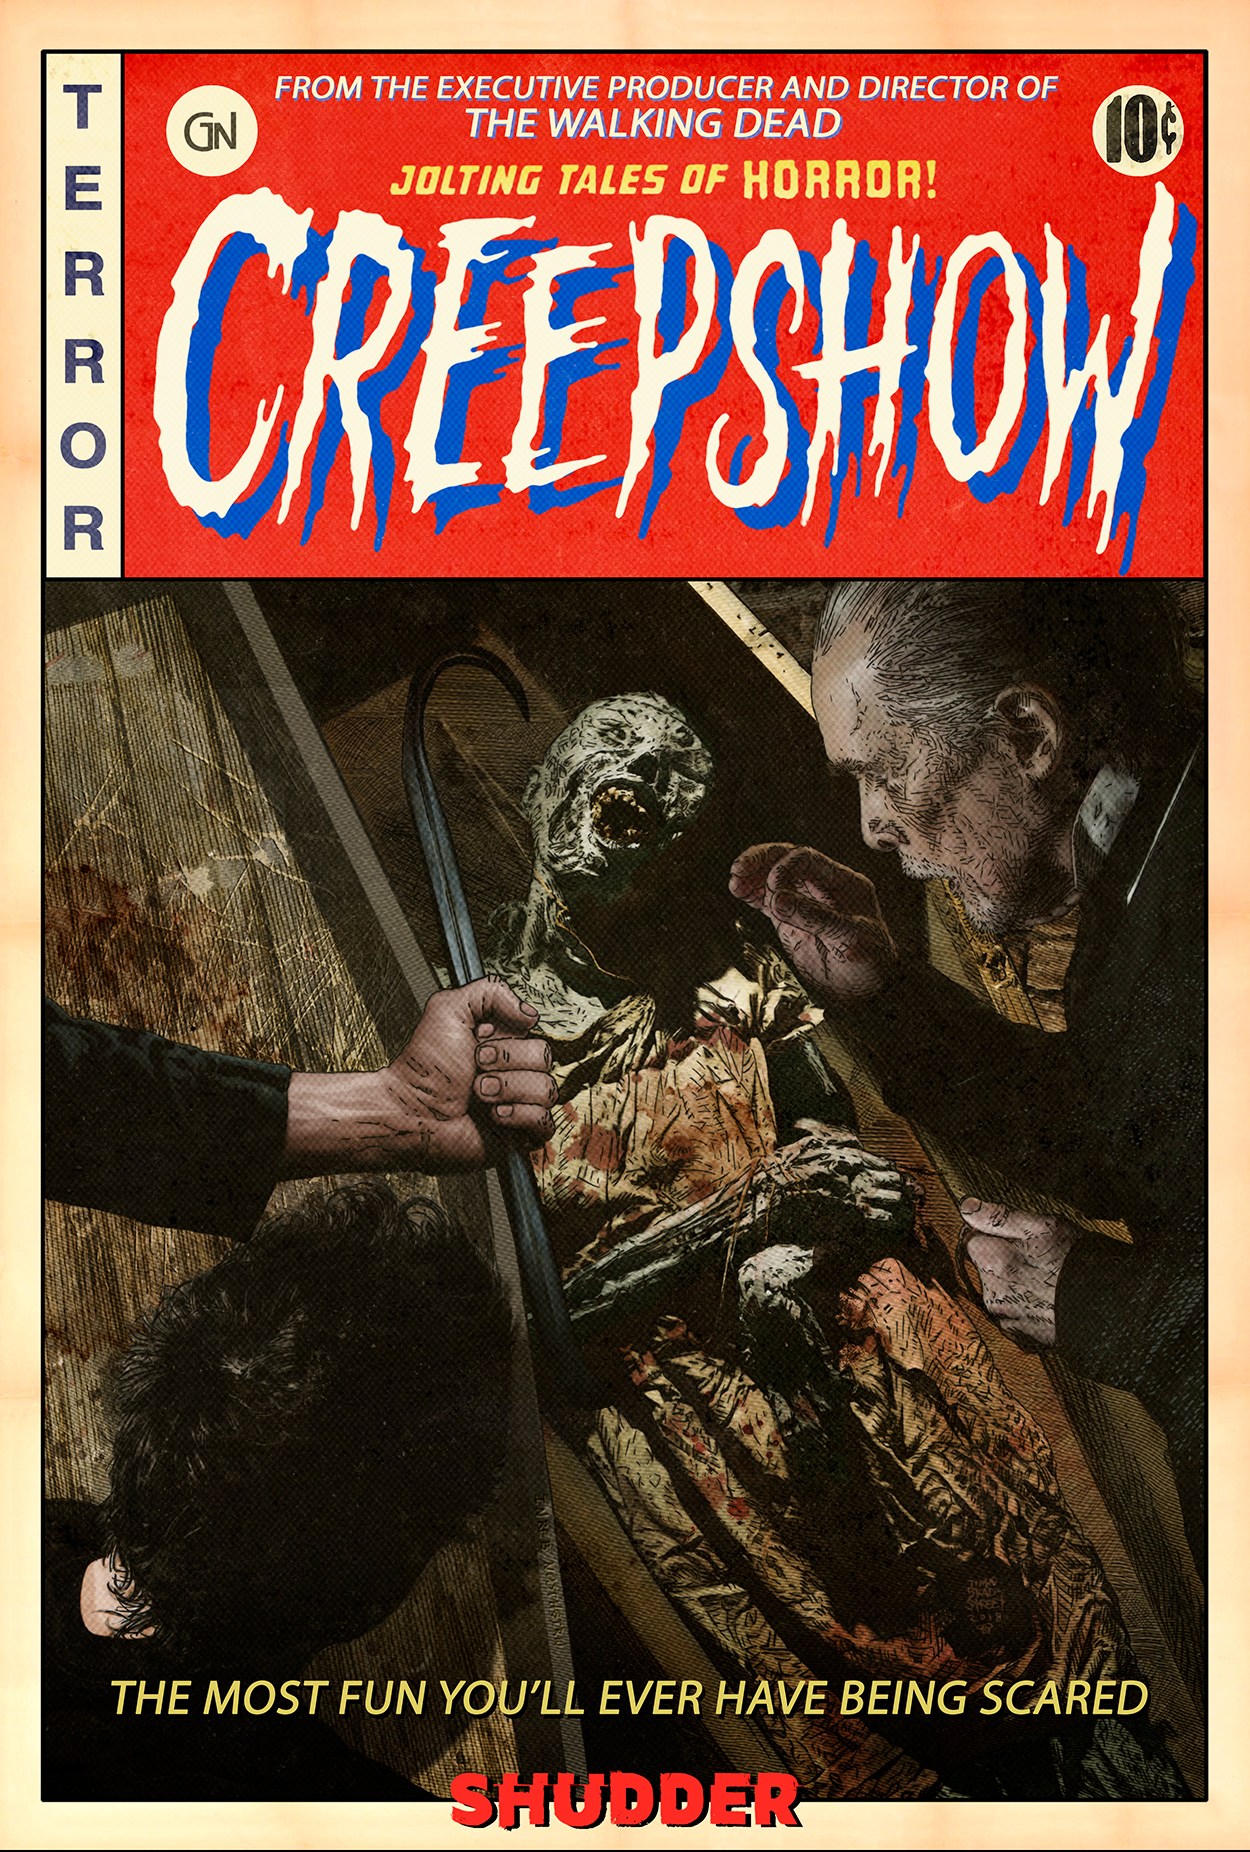 Creepshow shudder affiche